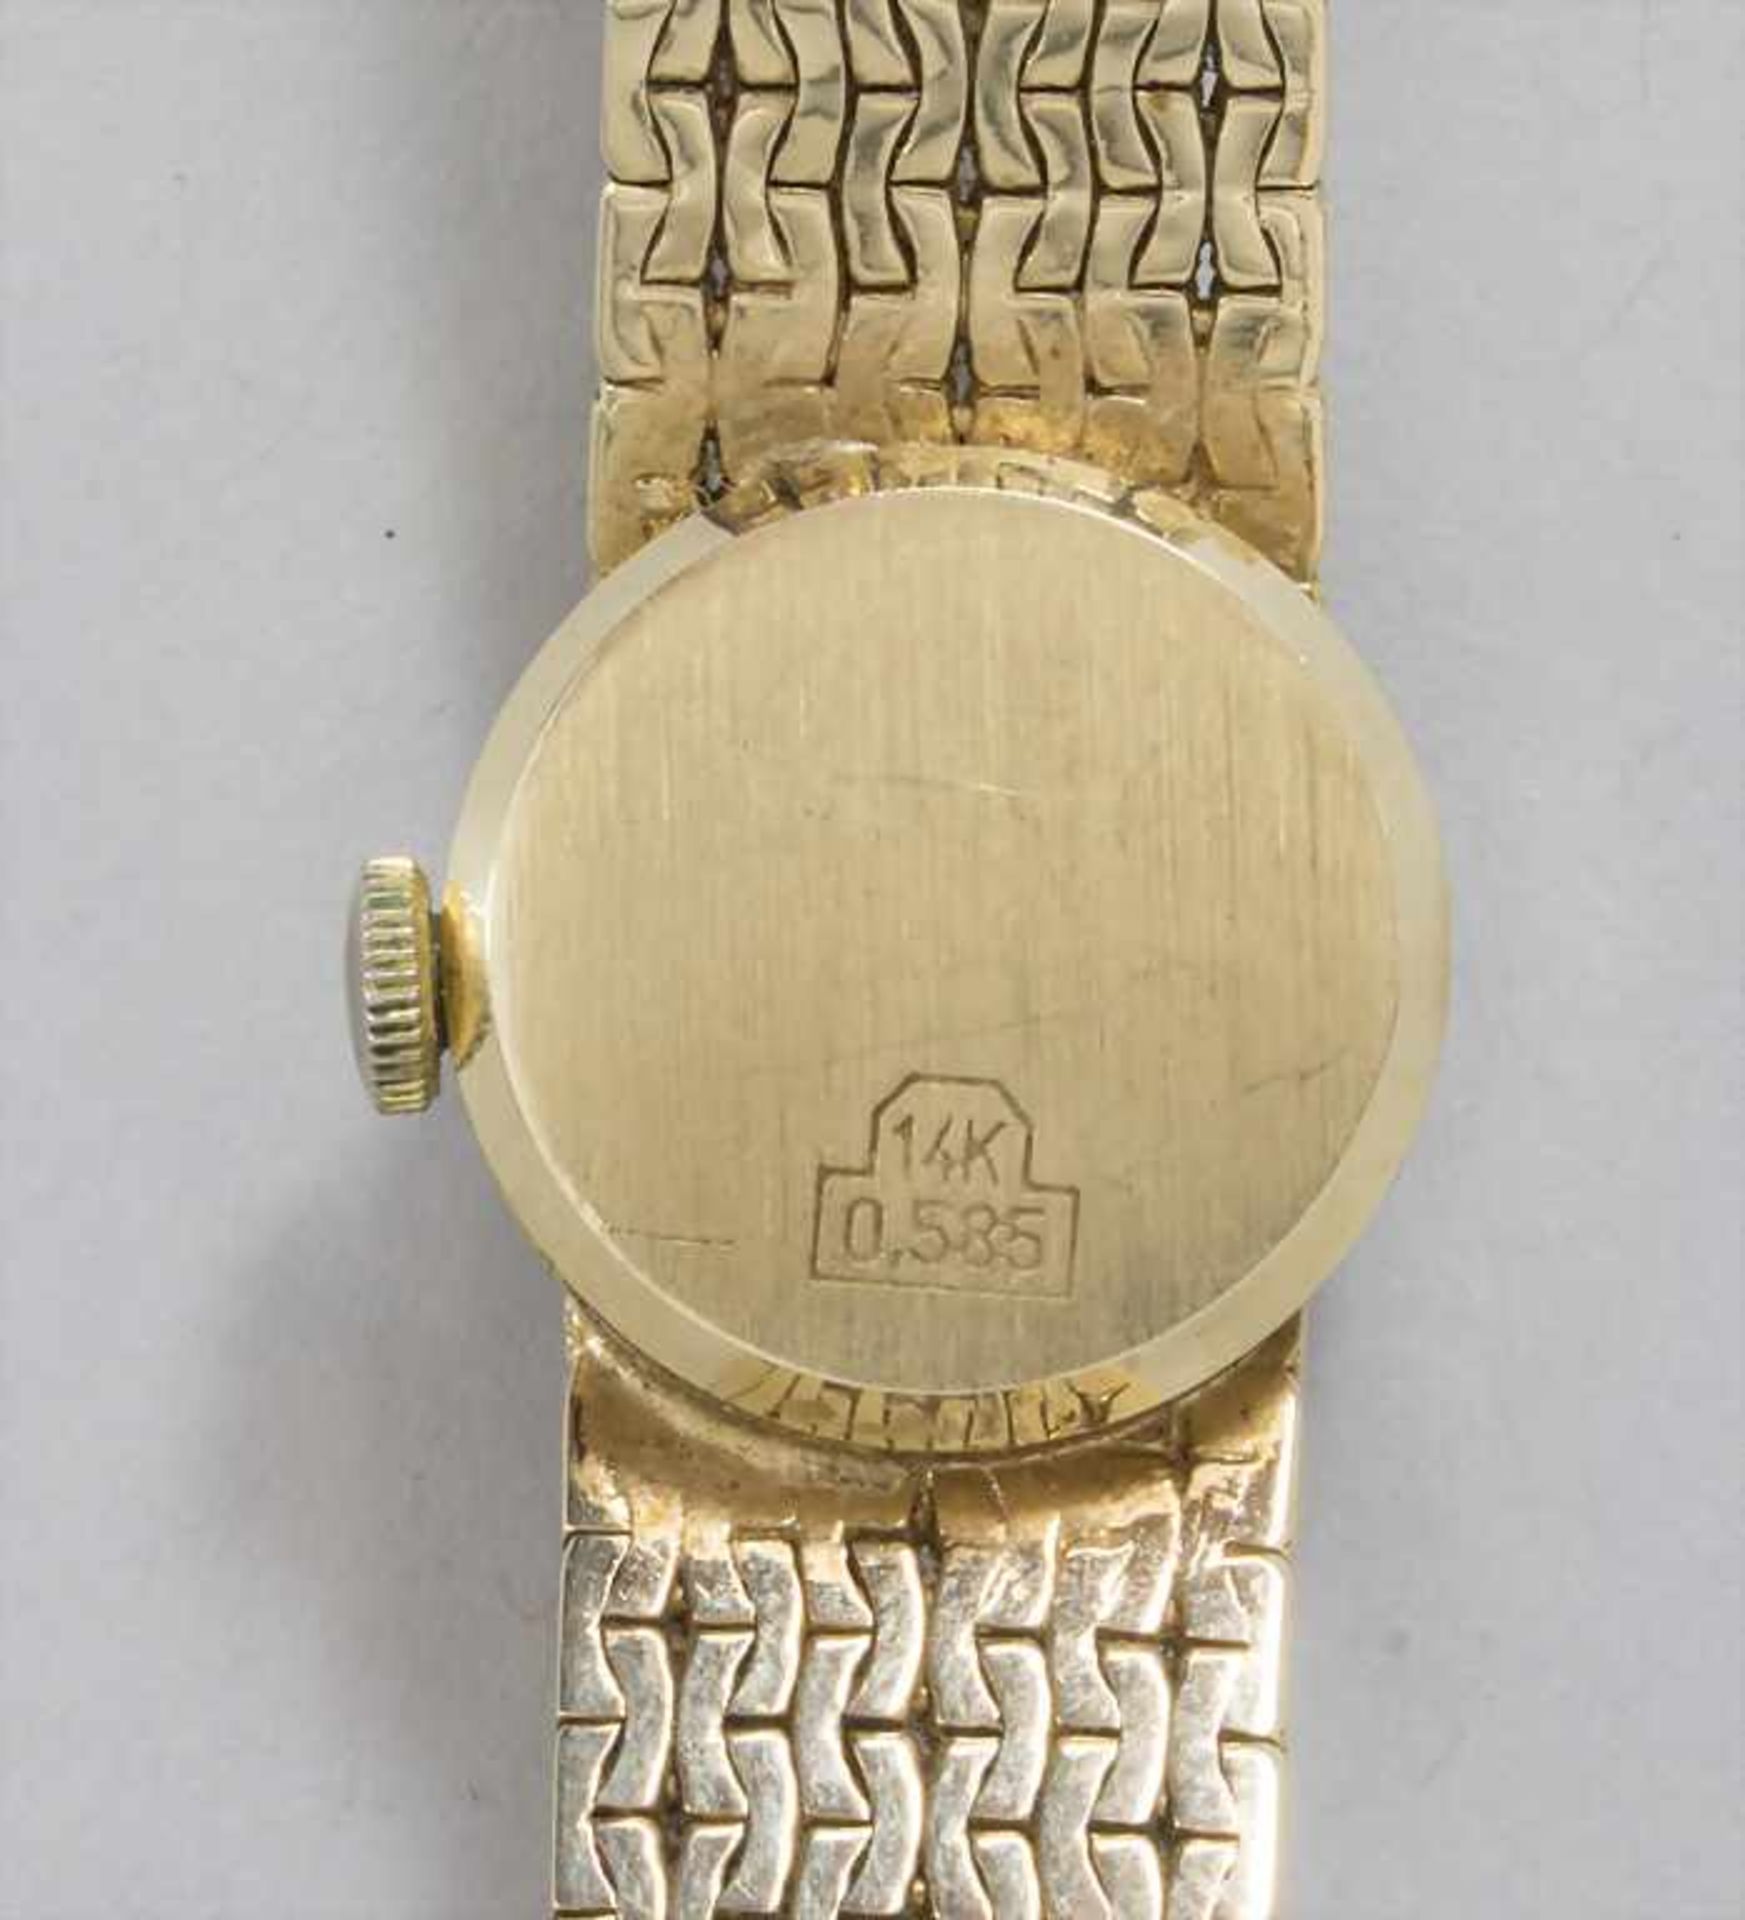 Damenarmbanduhr in Gold / A ladies watch in gold, Carib, um 1965 - Image 3 of 3